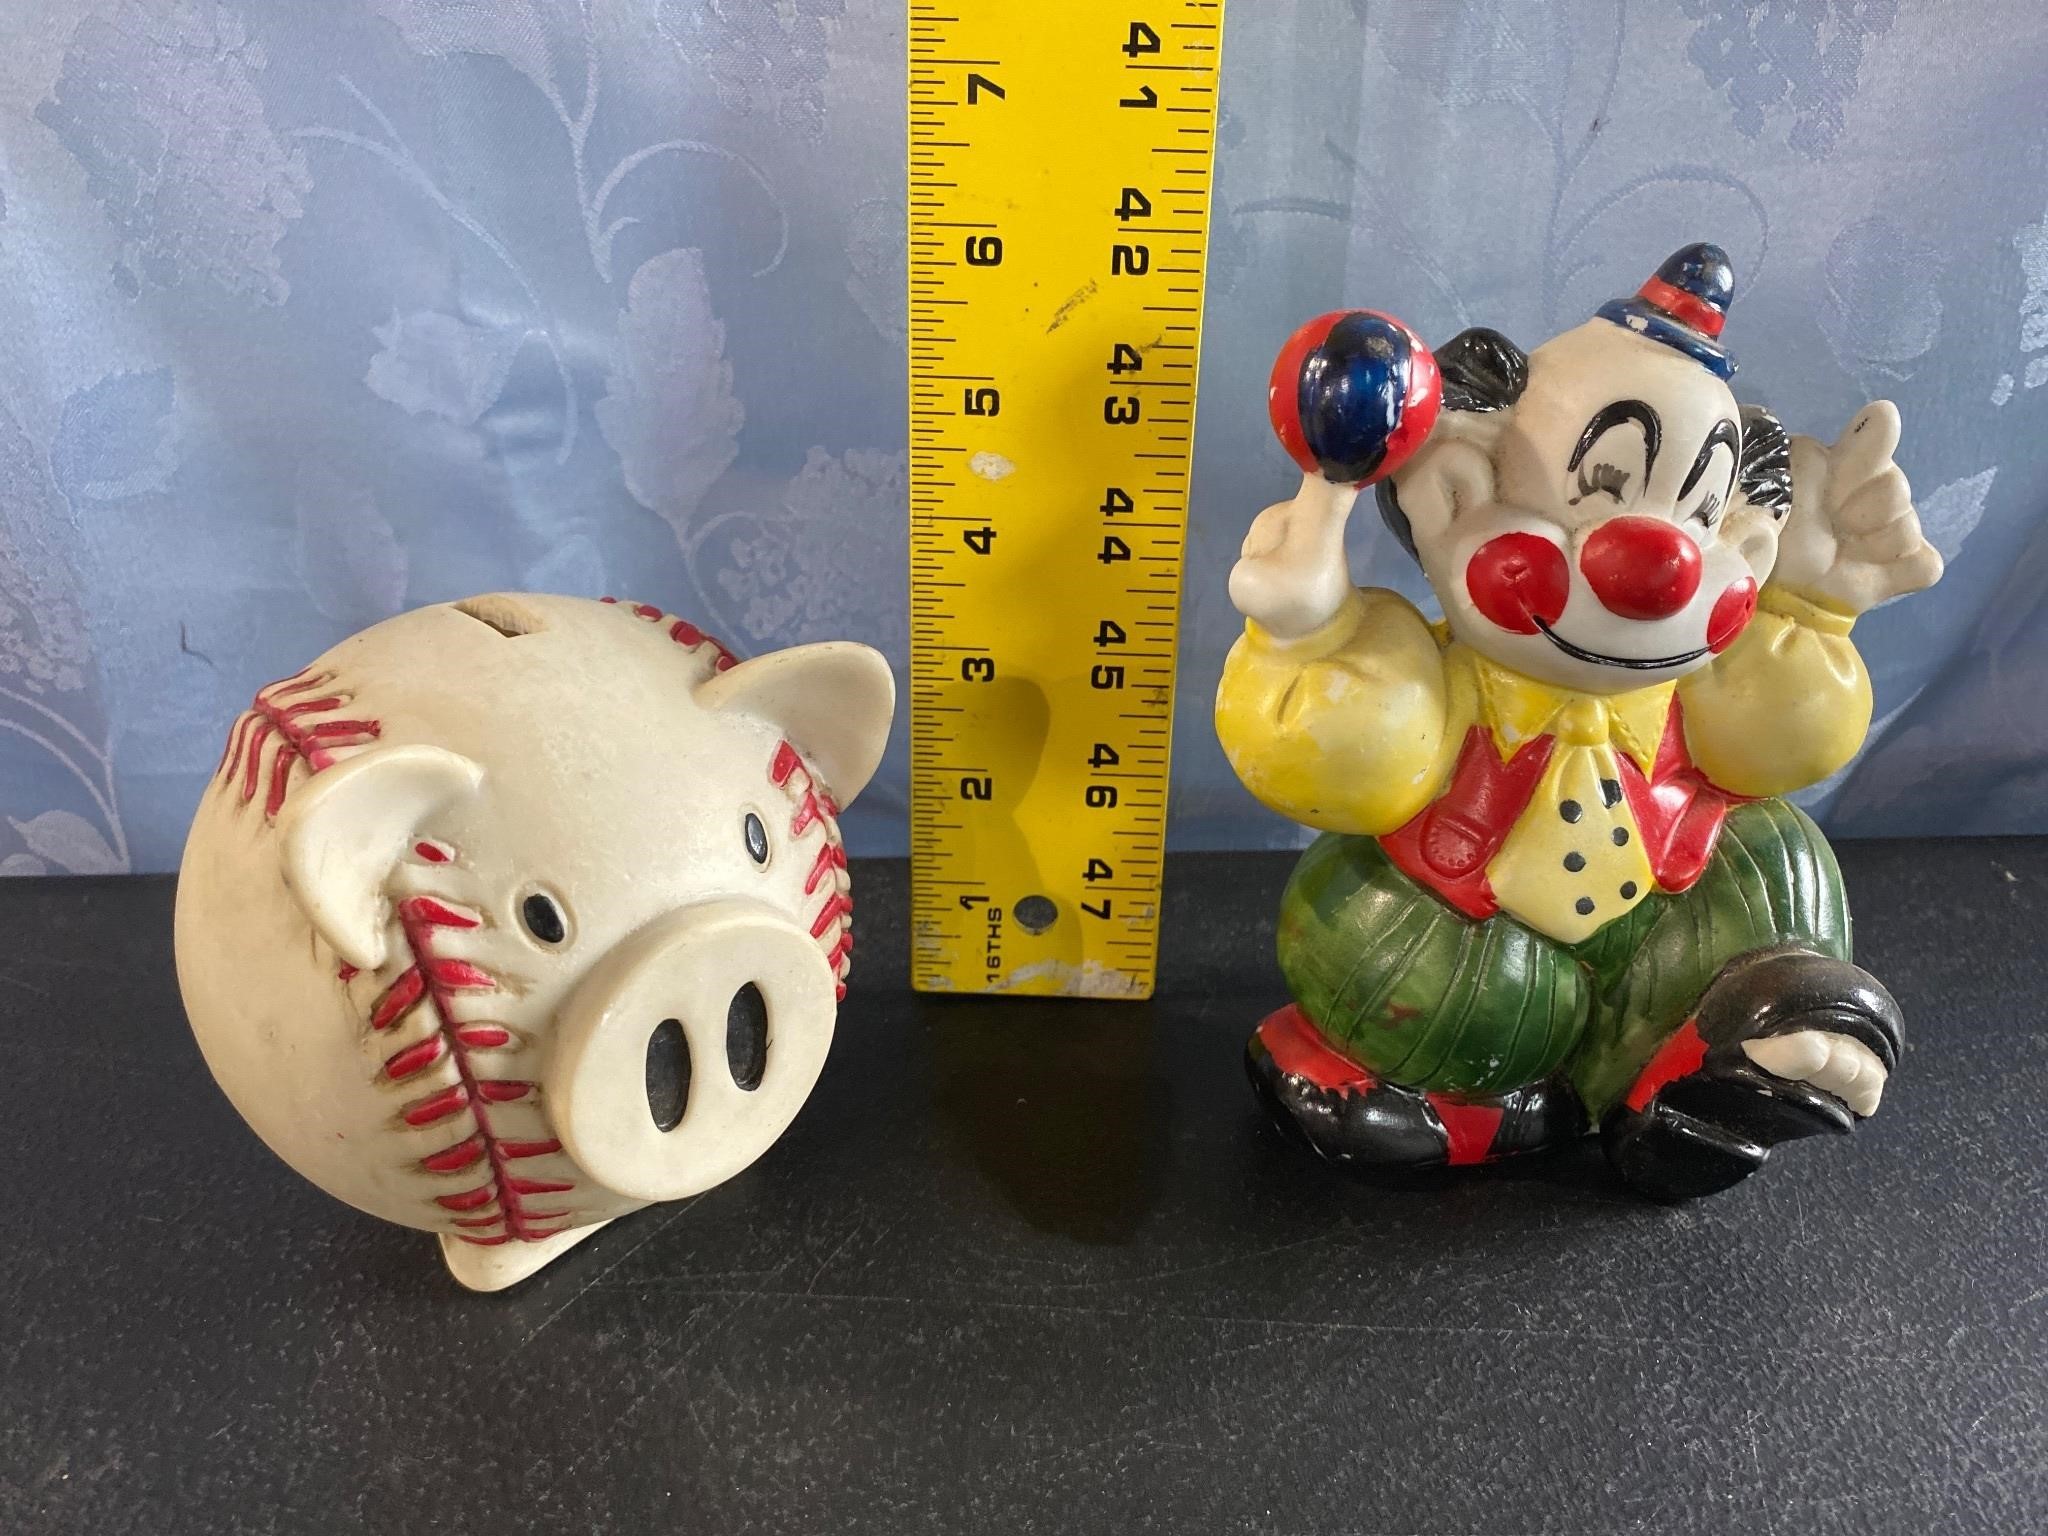 Porcelain Clown and Resin Piggy Bank